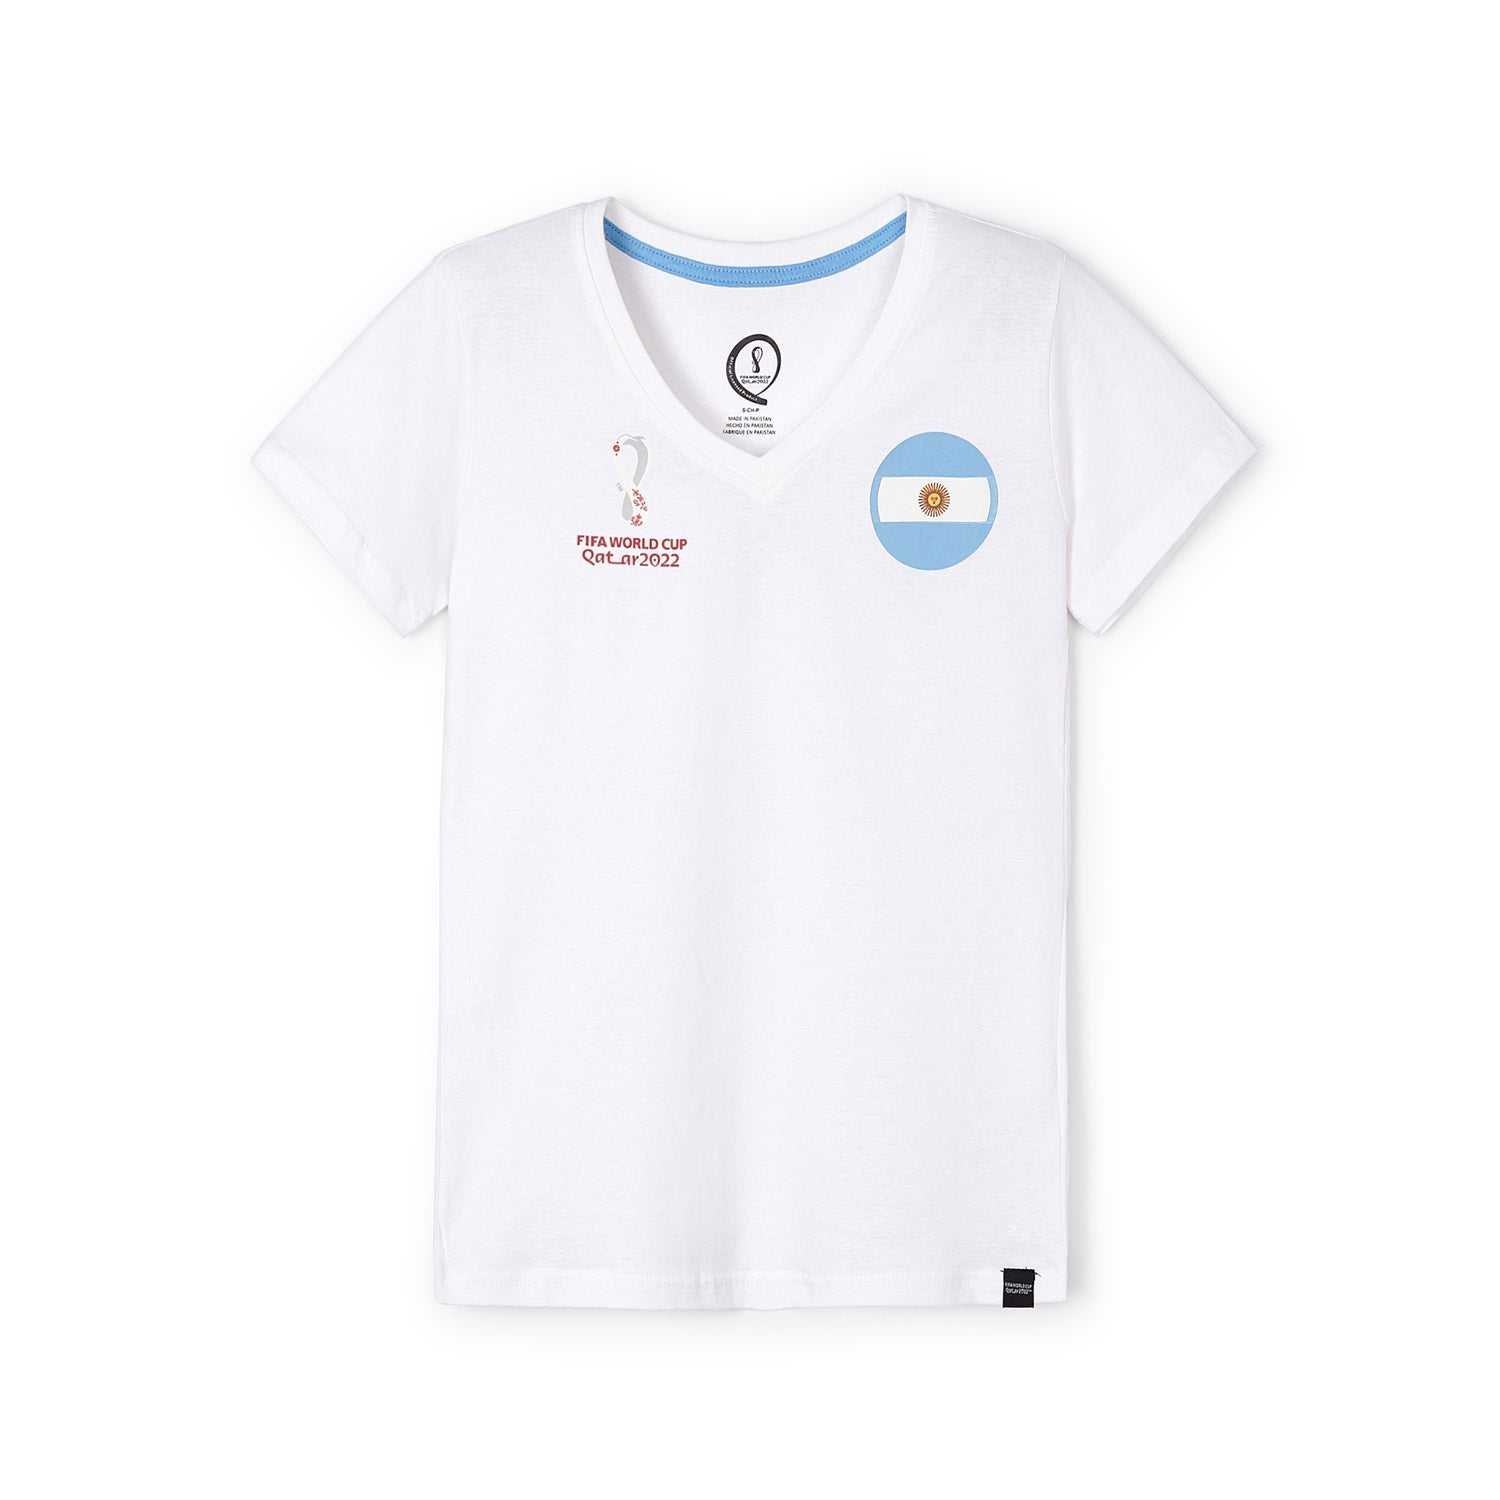 2022 World Cup Argentina White T-Shirt - Women's